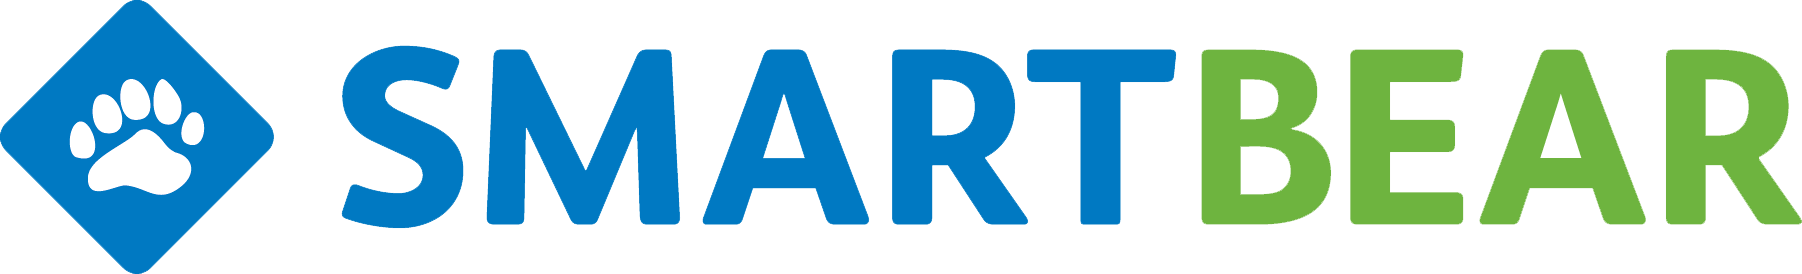 smarbear-logo